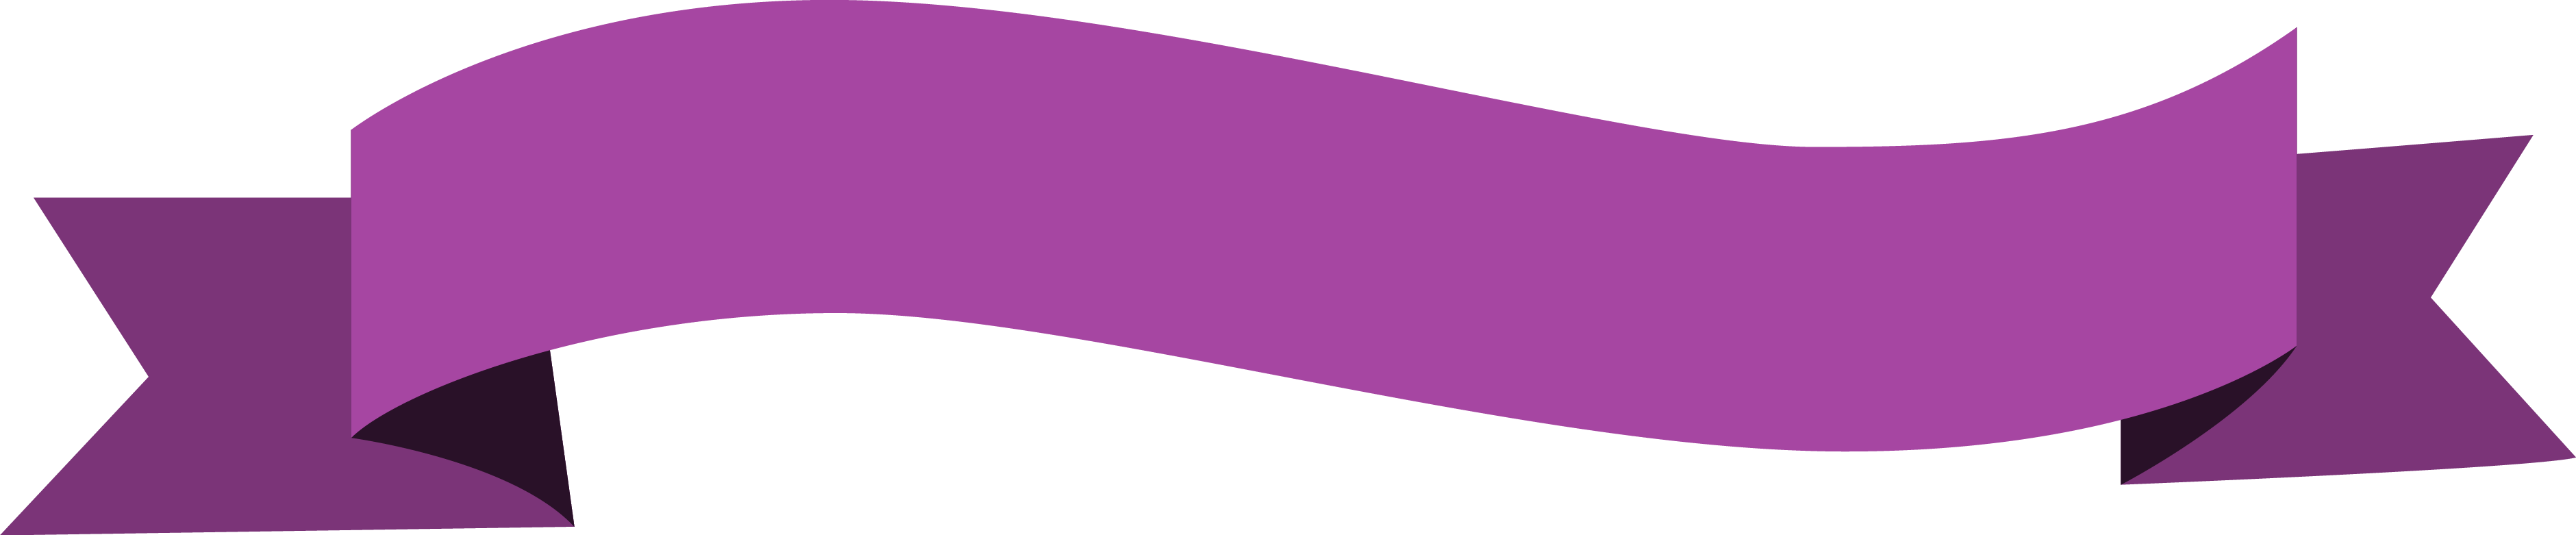 Banner Ribbon Logo Angle Template PNG